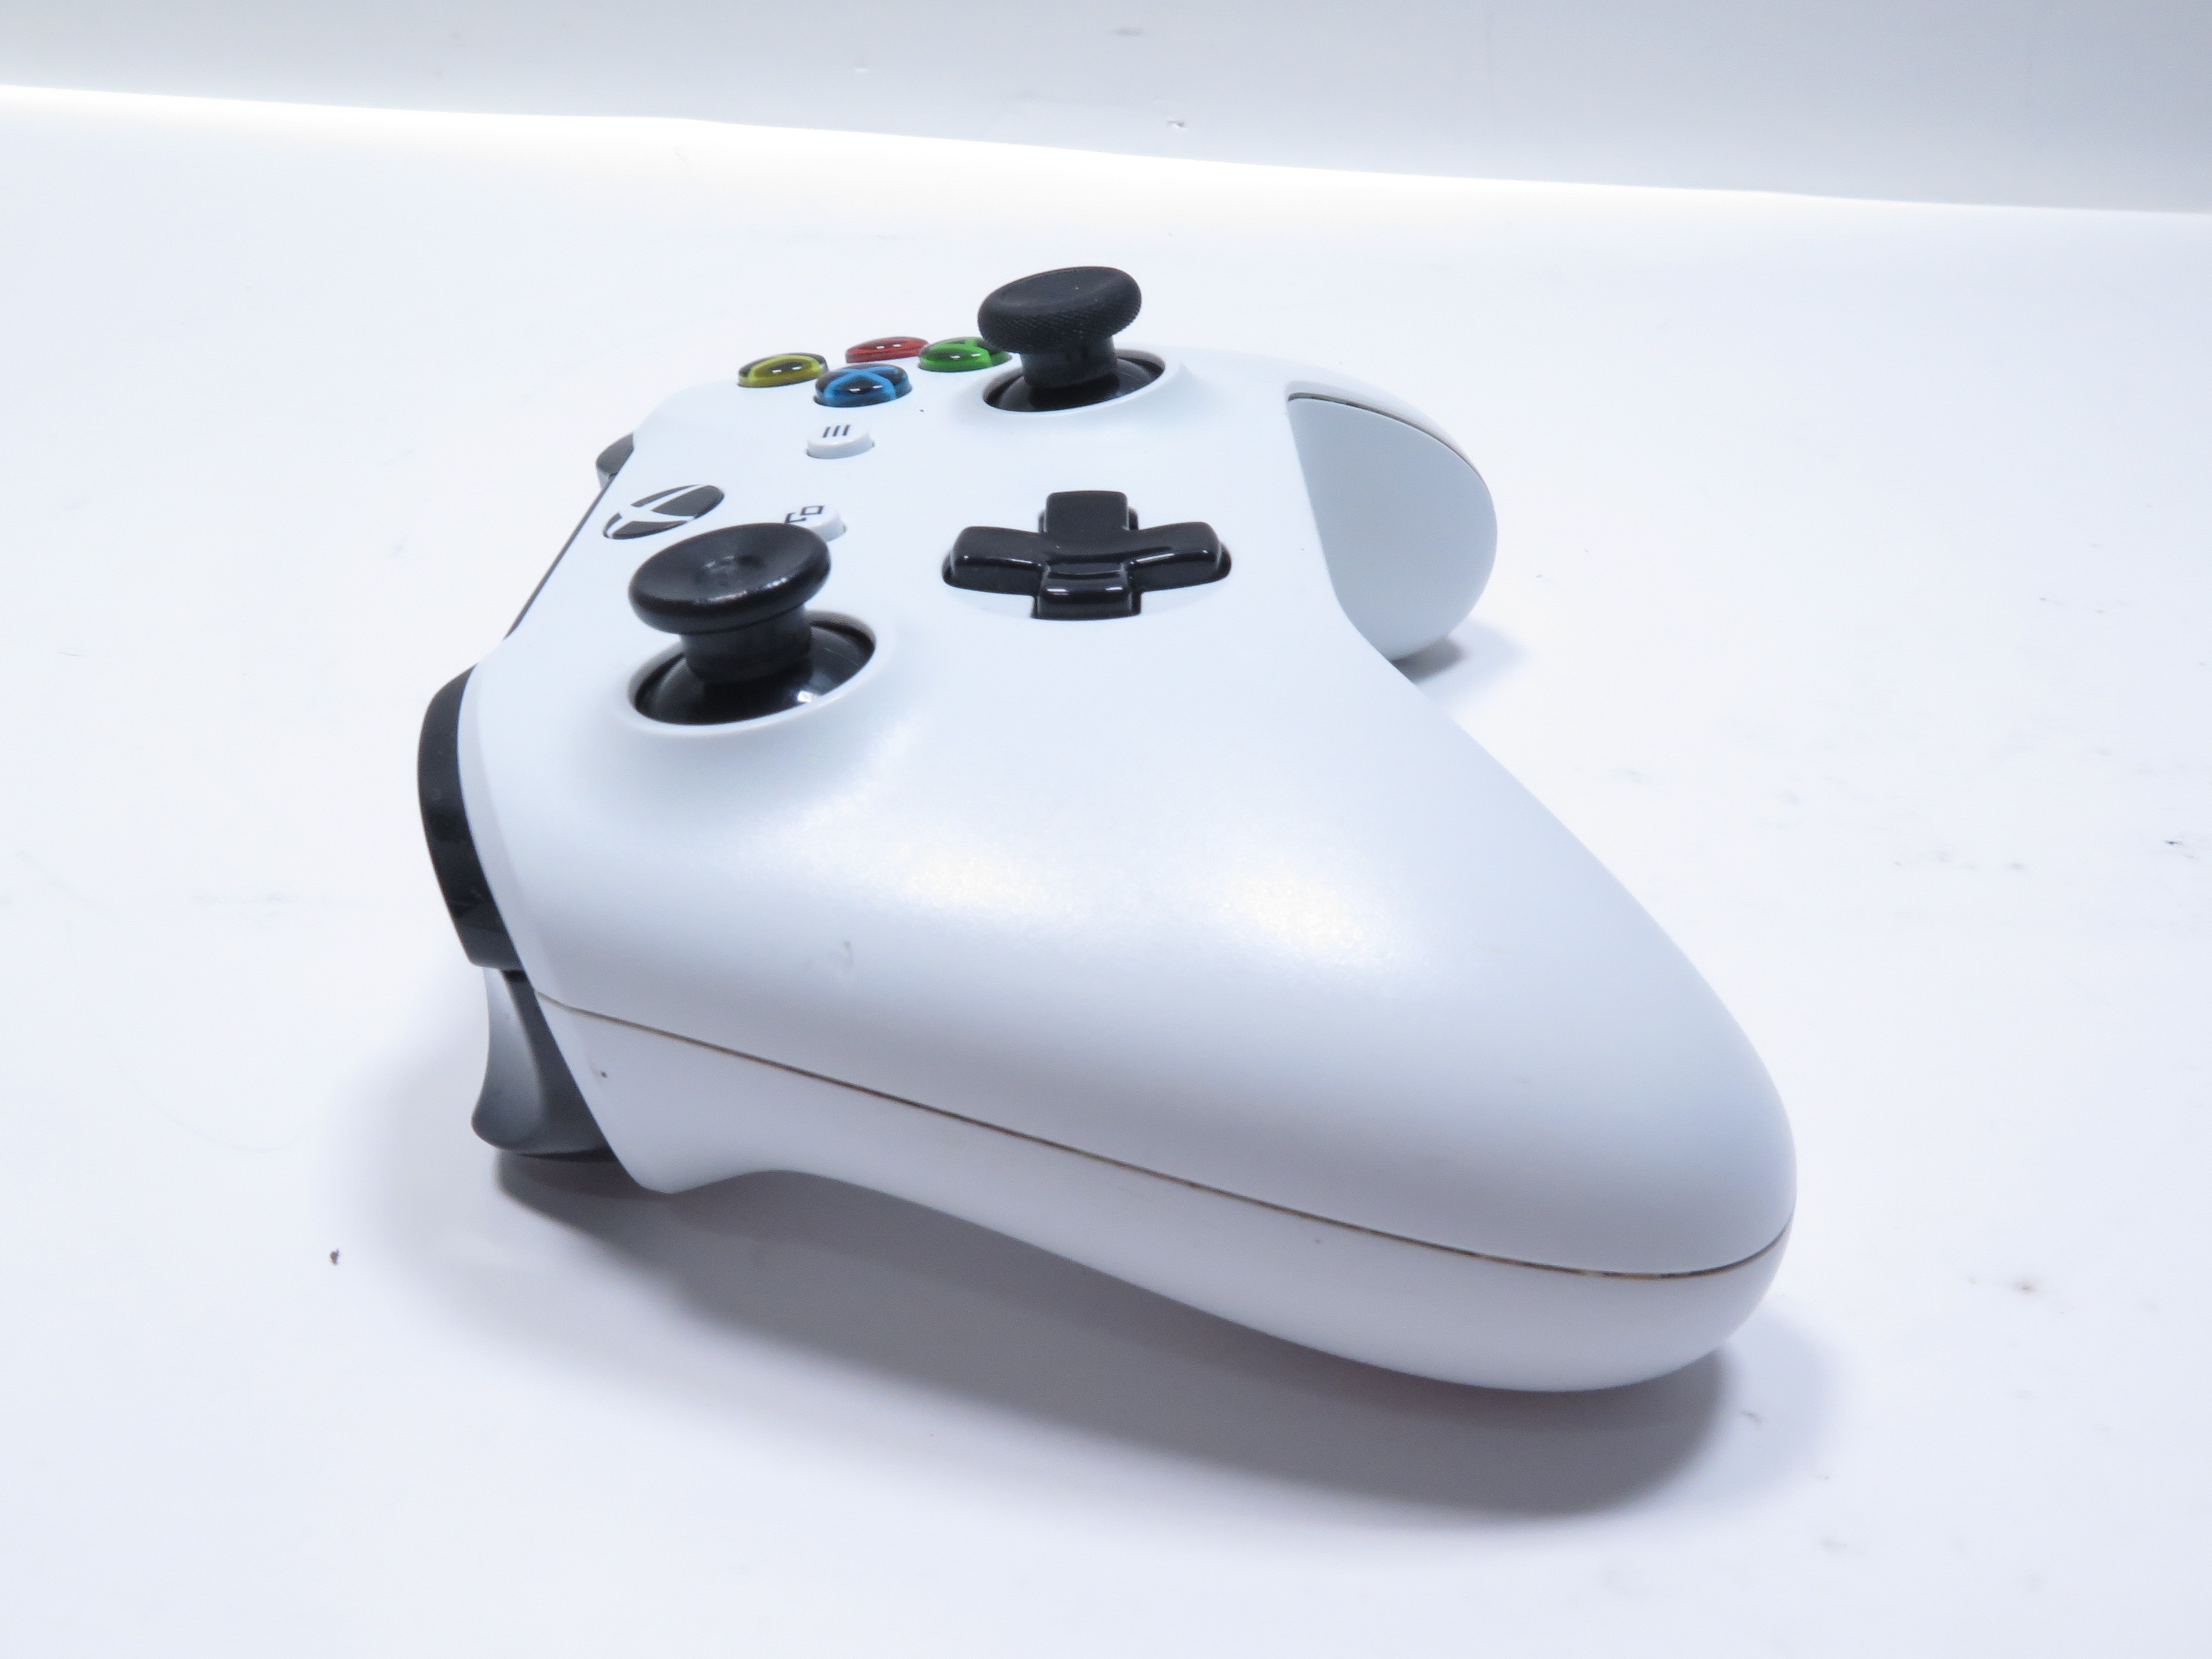 Microsoft Xbox One Controller 1708 ~ White 